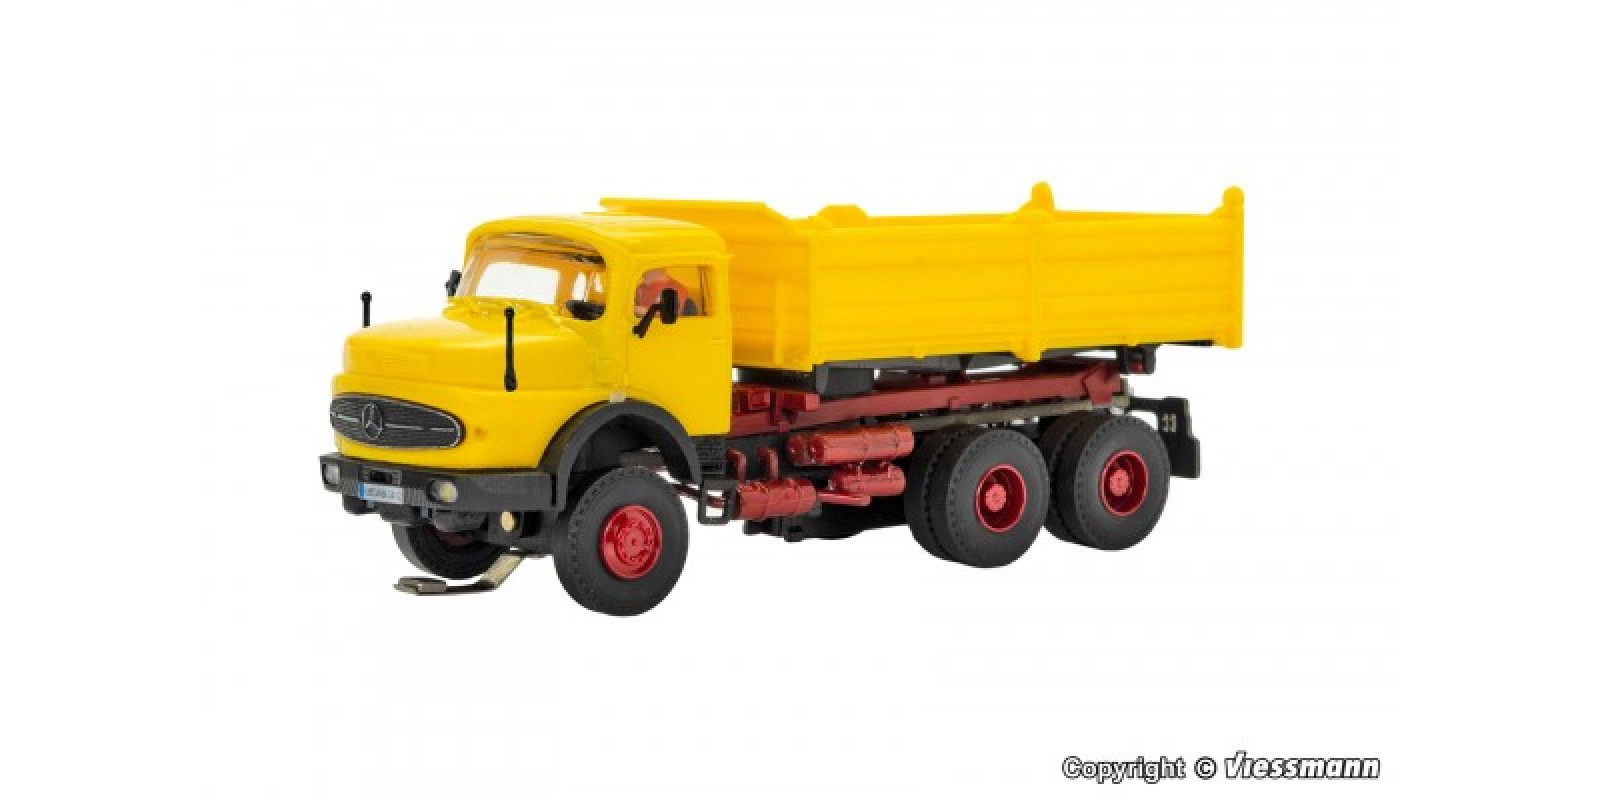 VI8020 H0 MB round bonnet 3-axle dump truck, basic, functional model